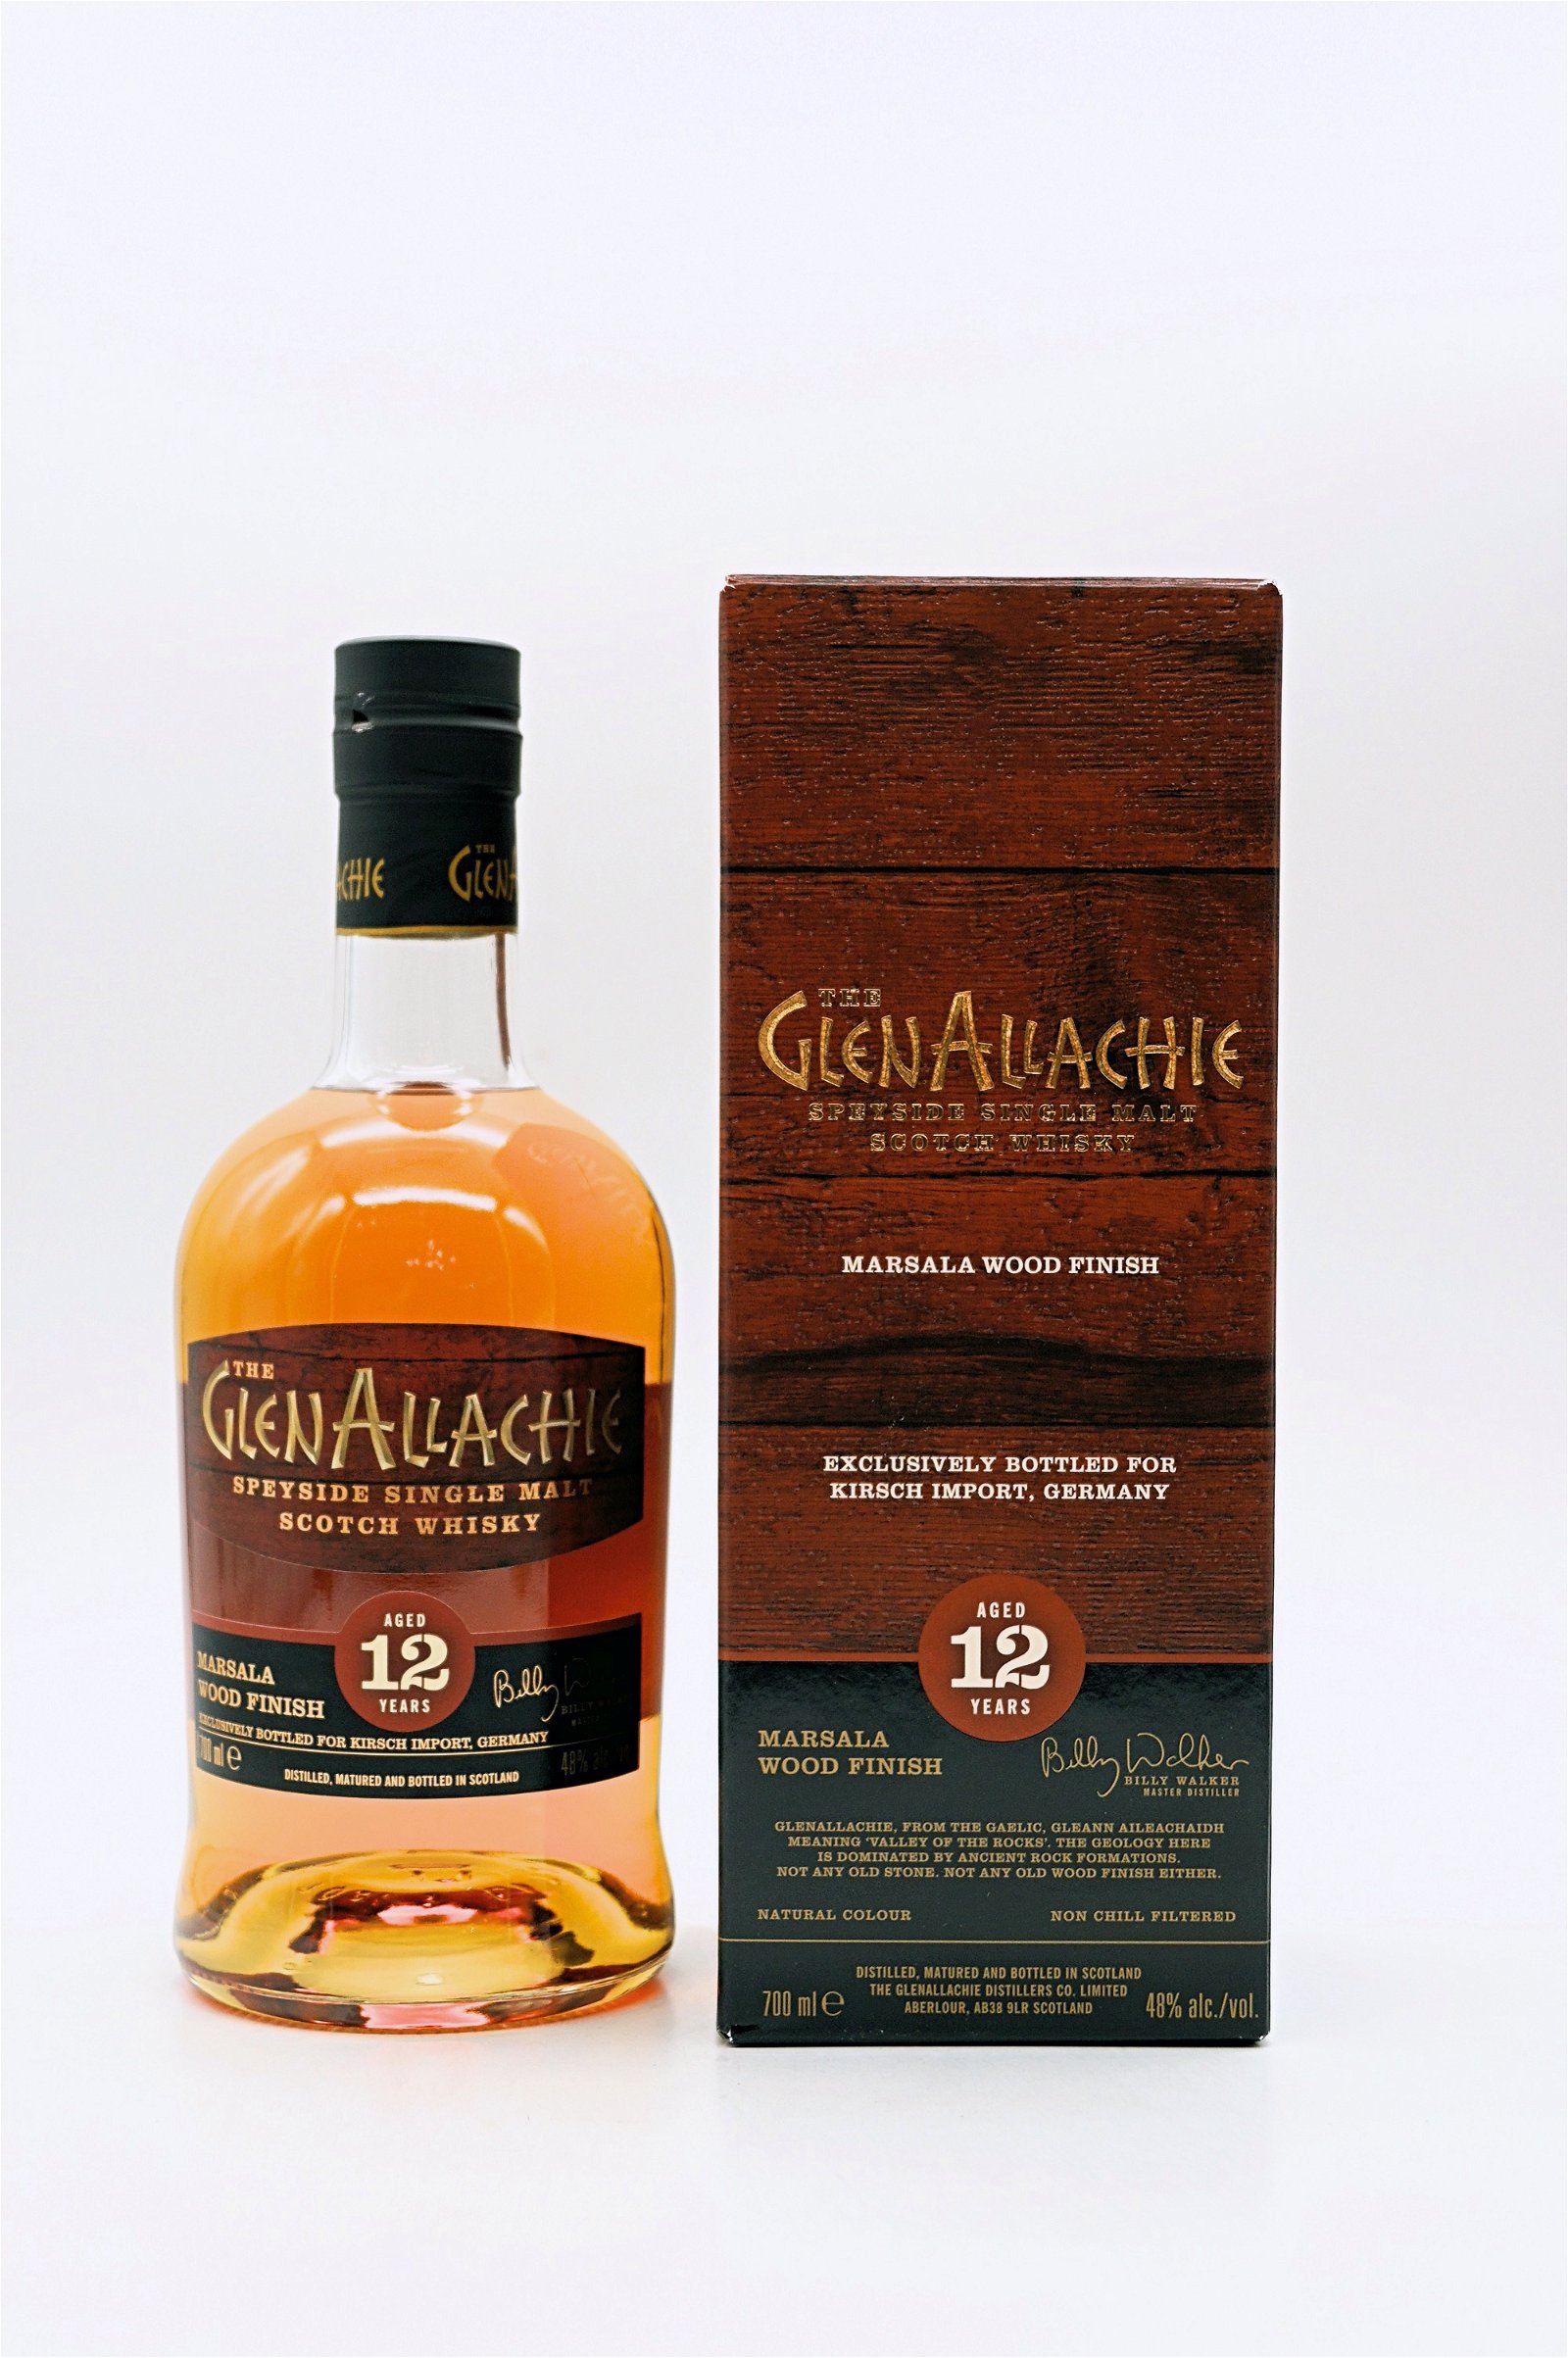 GlenAllachie 12 Jahre Marsala Wood Finish Speyside Single Malt Scotch Whisky